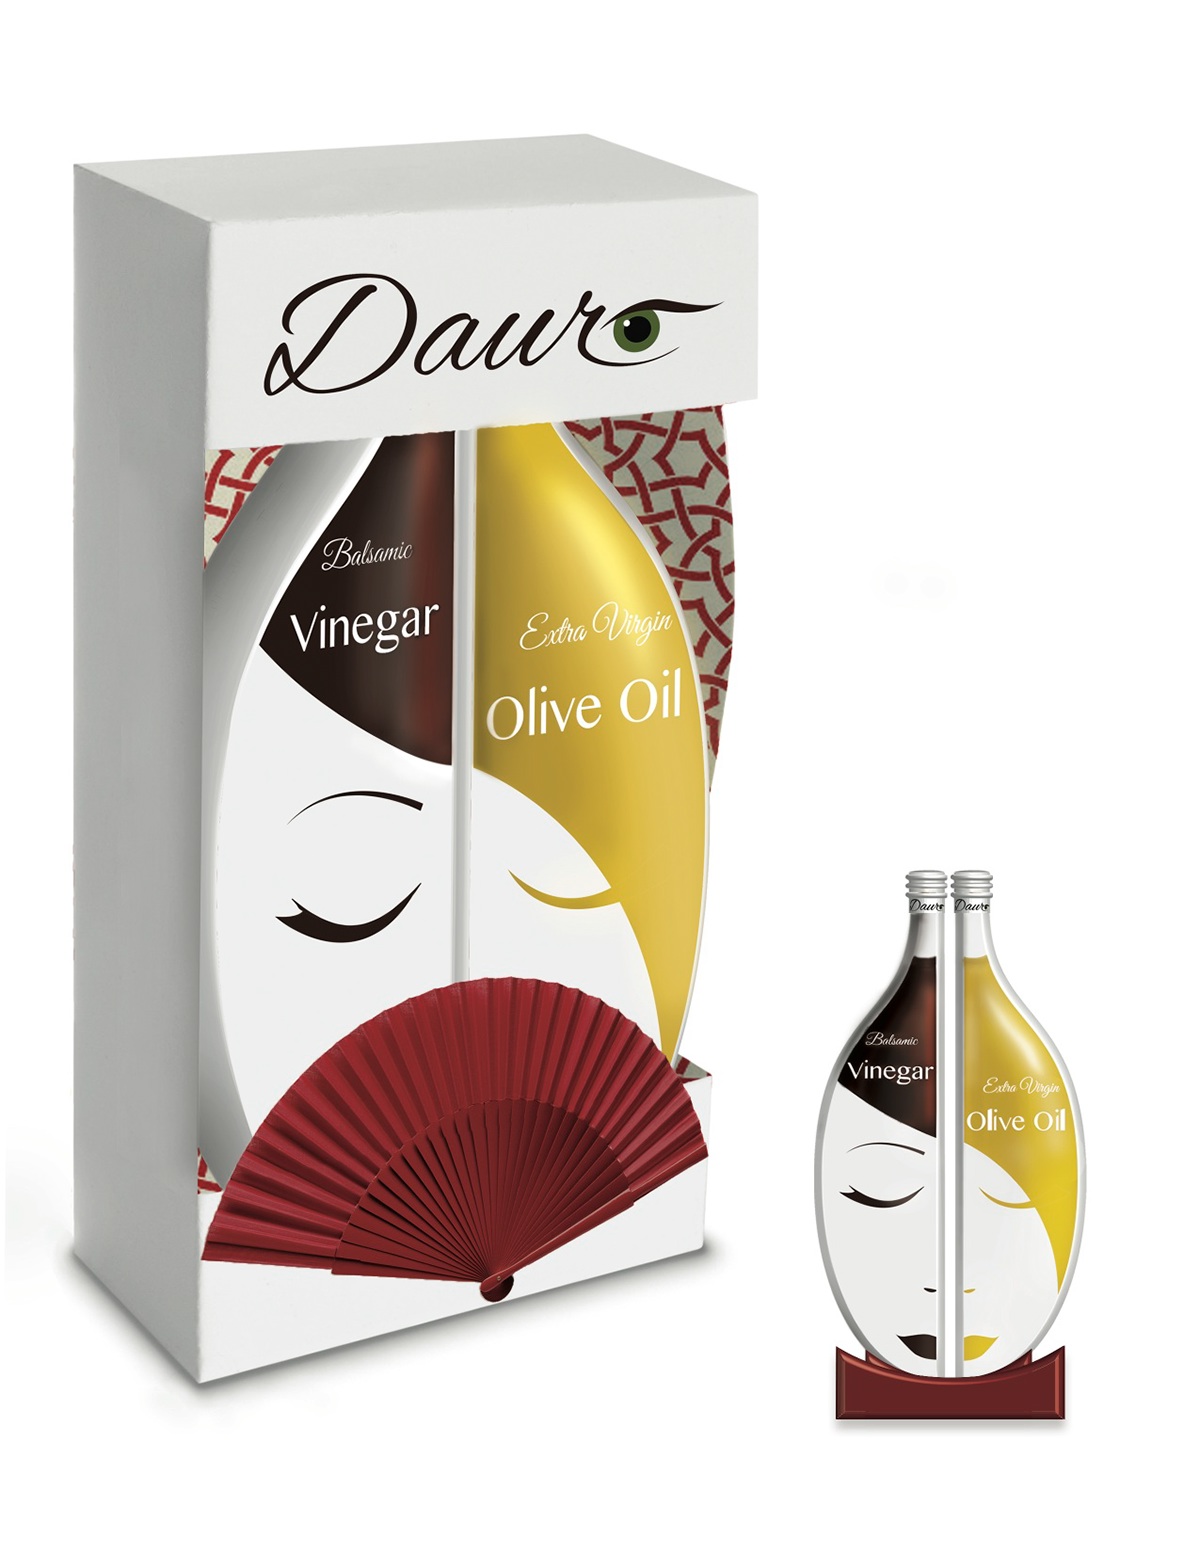 Dauro oilve oil package design 